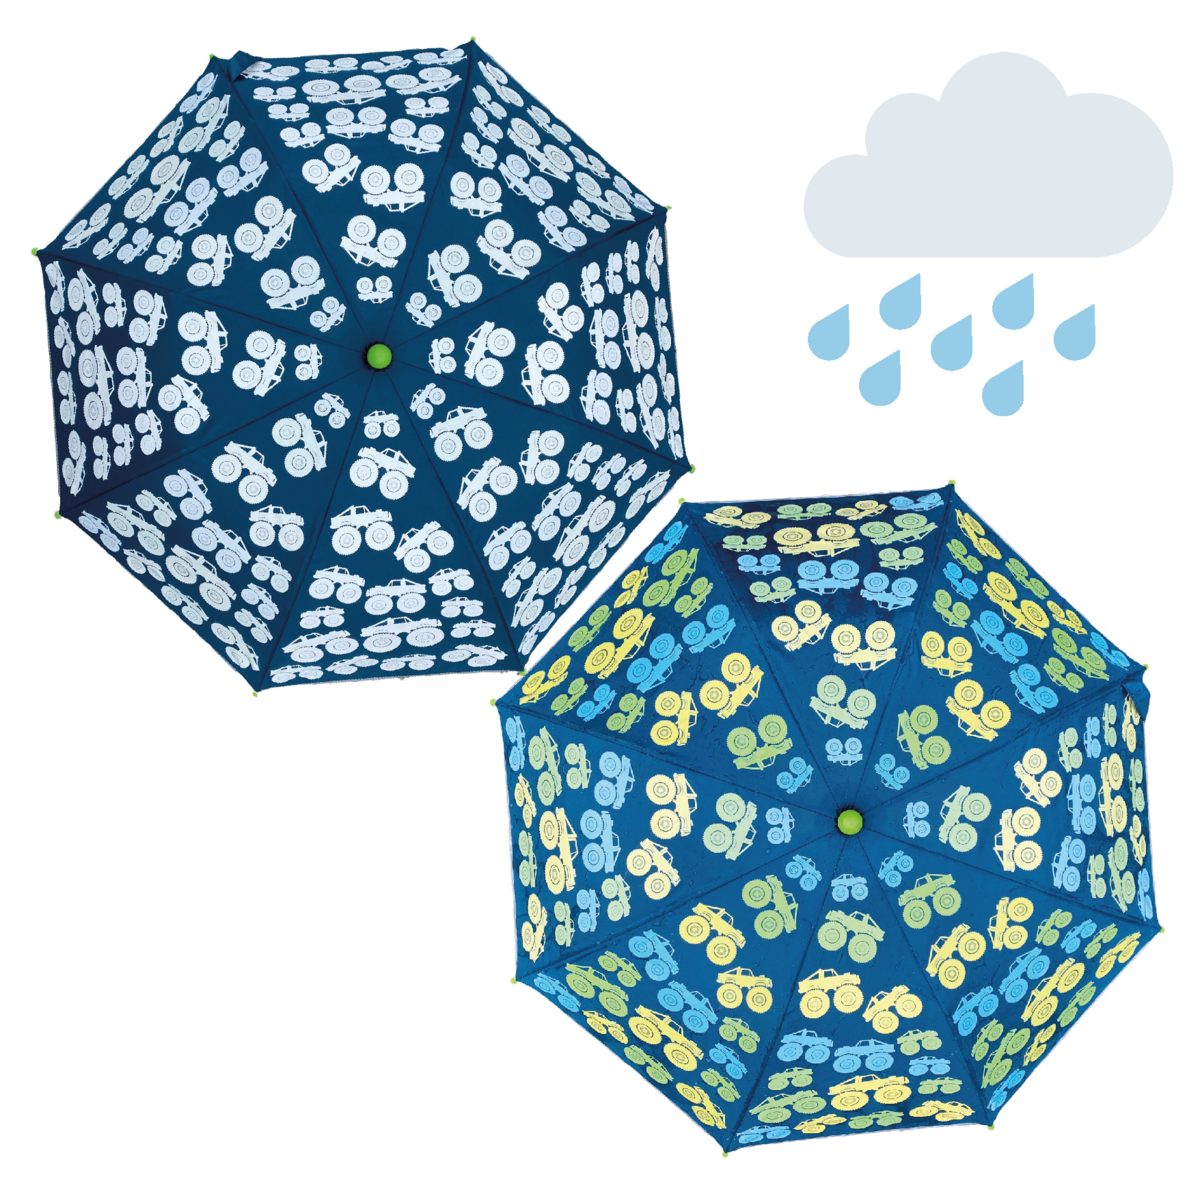 Regenschirm Farbe bei Magic die wechselt Taschenregenschirm Monstertruck, Kinder - HECKBO Regen